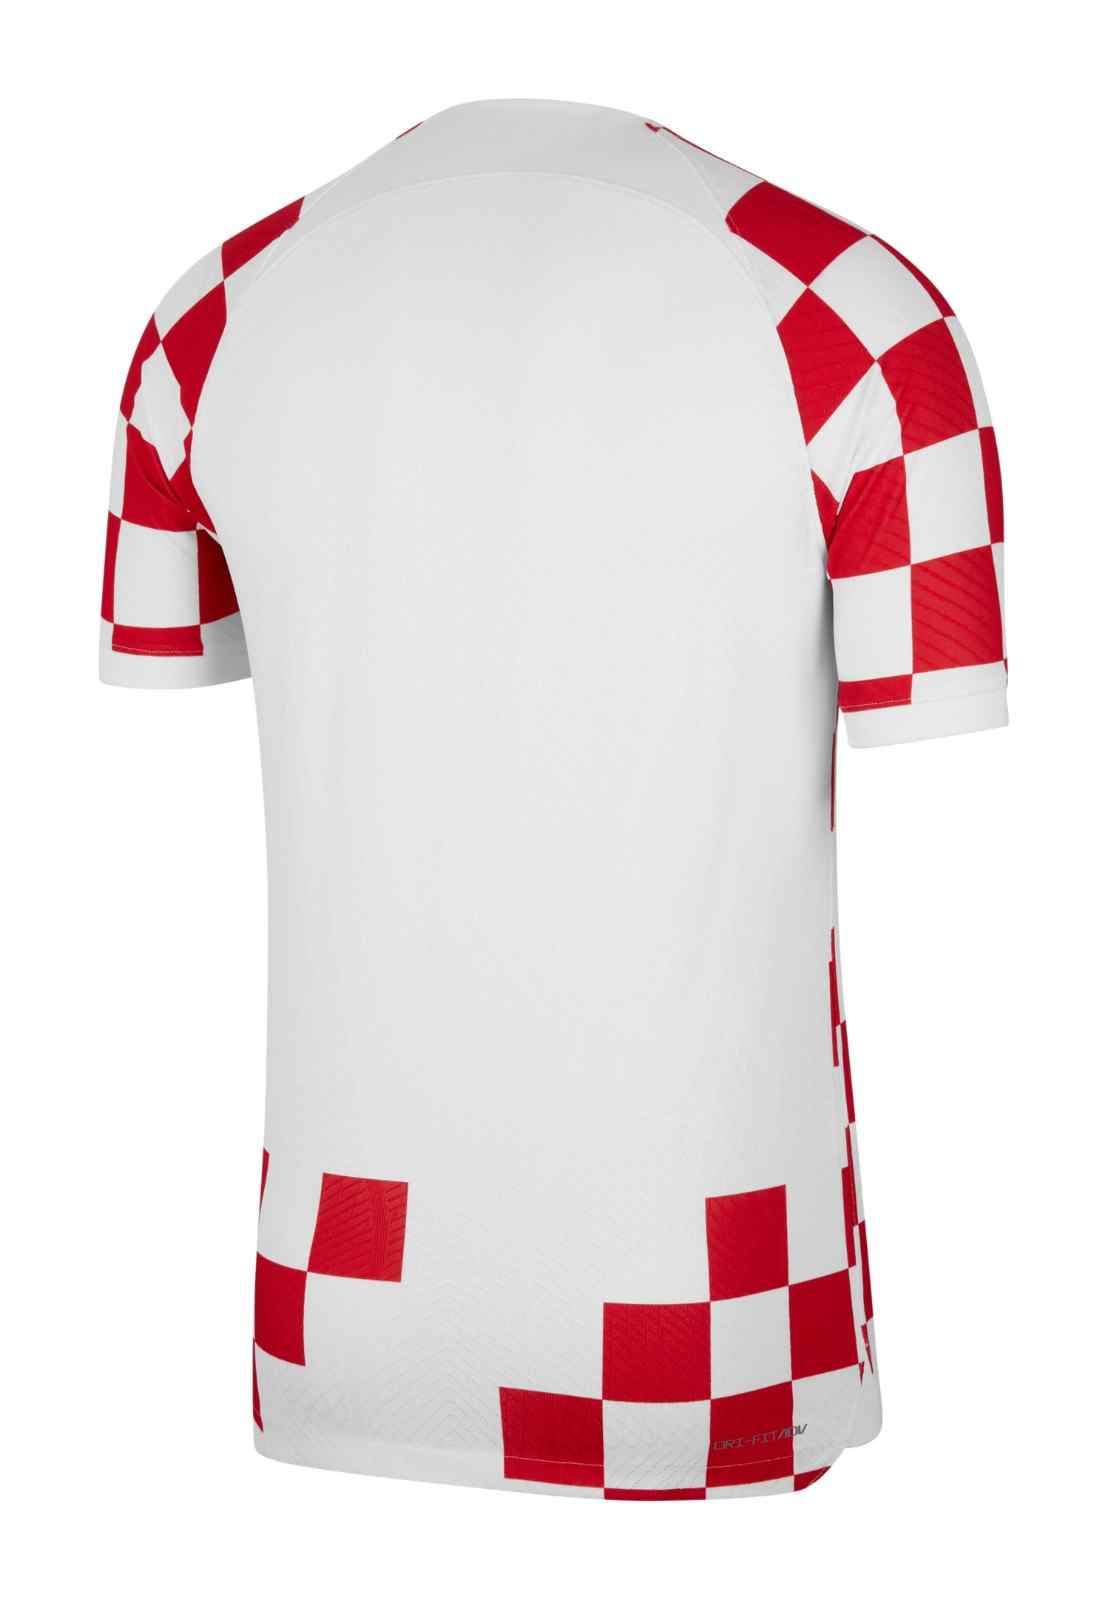 Nike-Croatia-2022-FIFA-World-Cup-Home-Kit-released